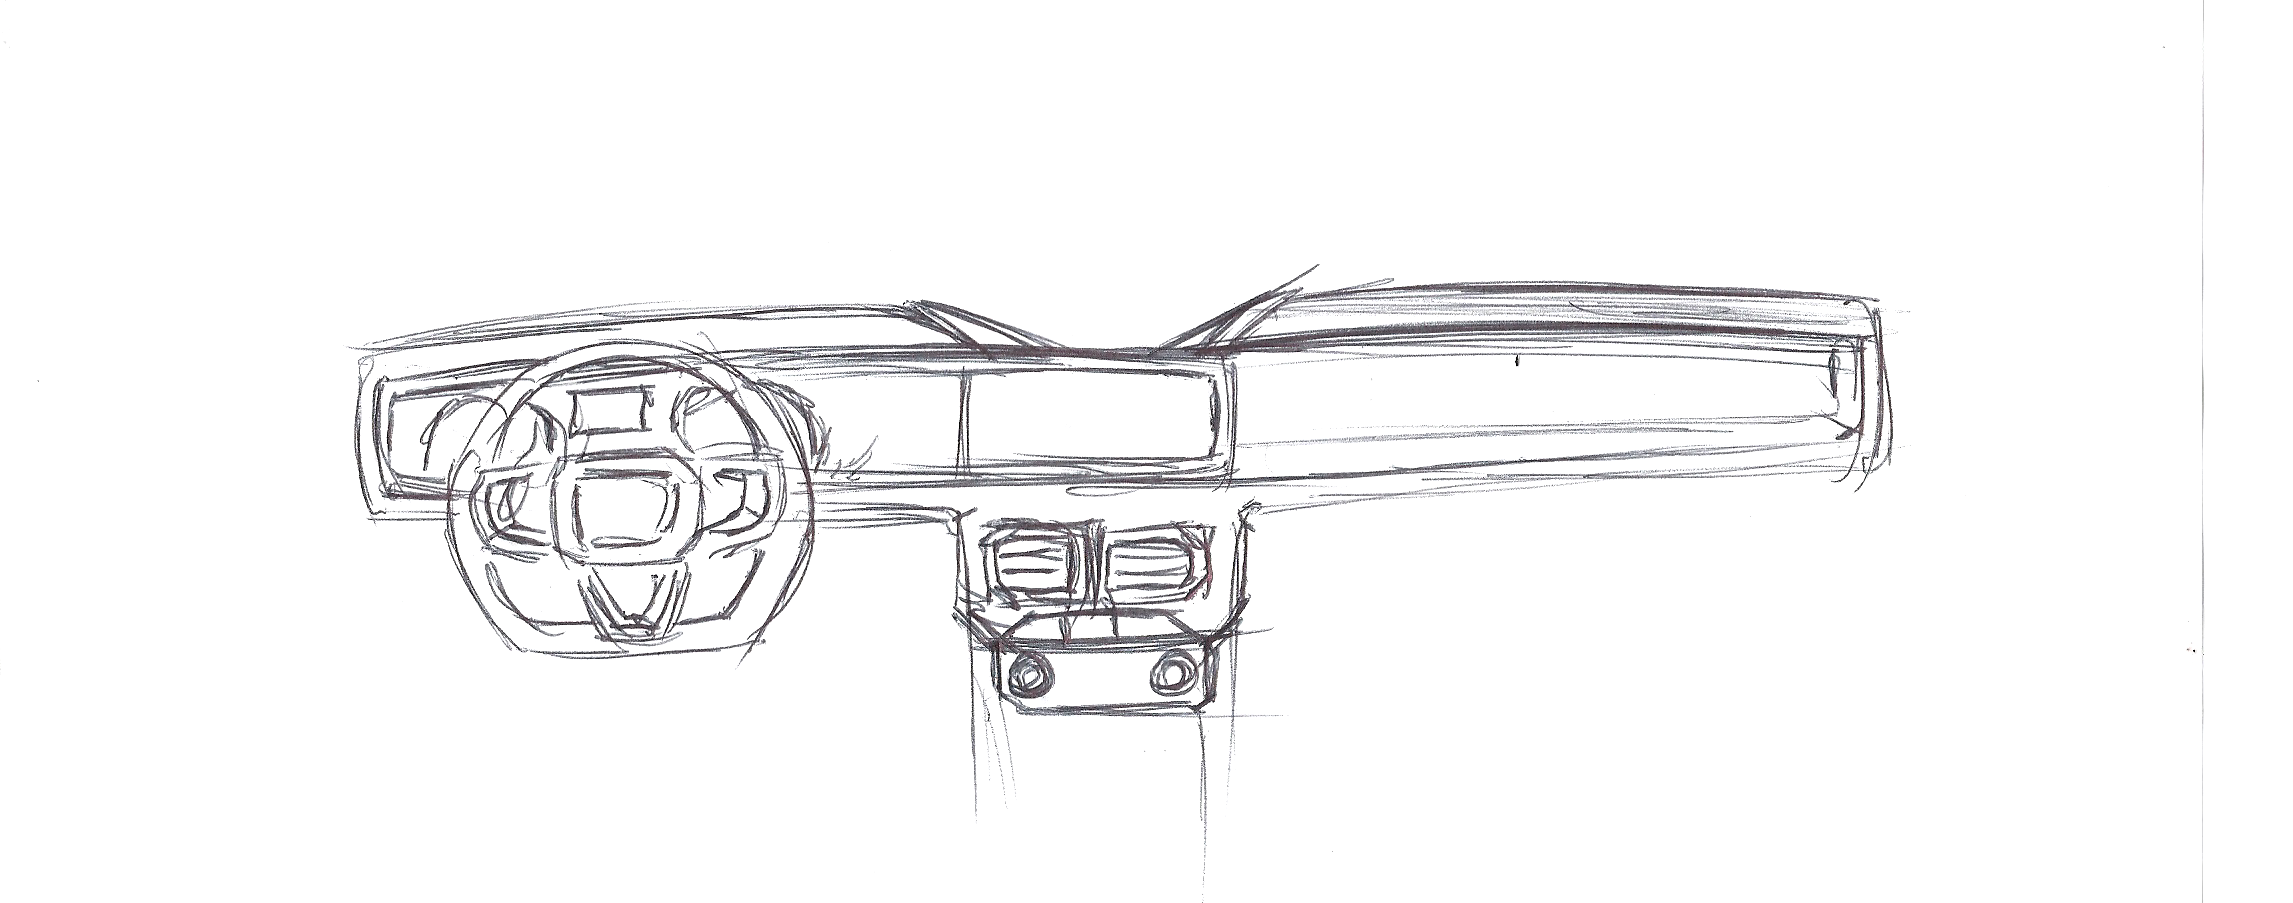 S650 Mustang S650 Mustang INTERIOR First Look Spyshots! + More Exterior Shots Dashboard sketch